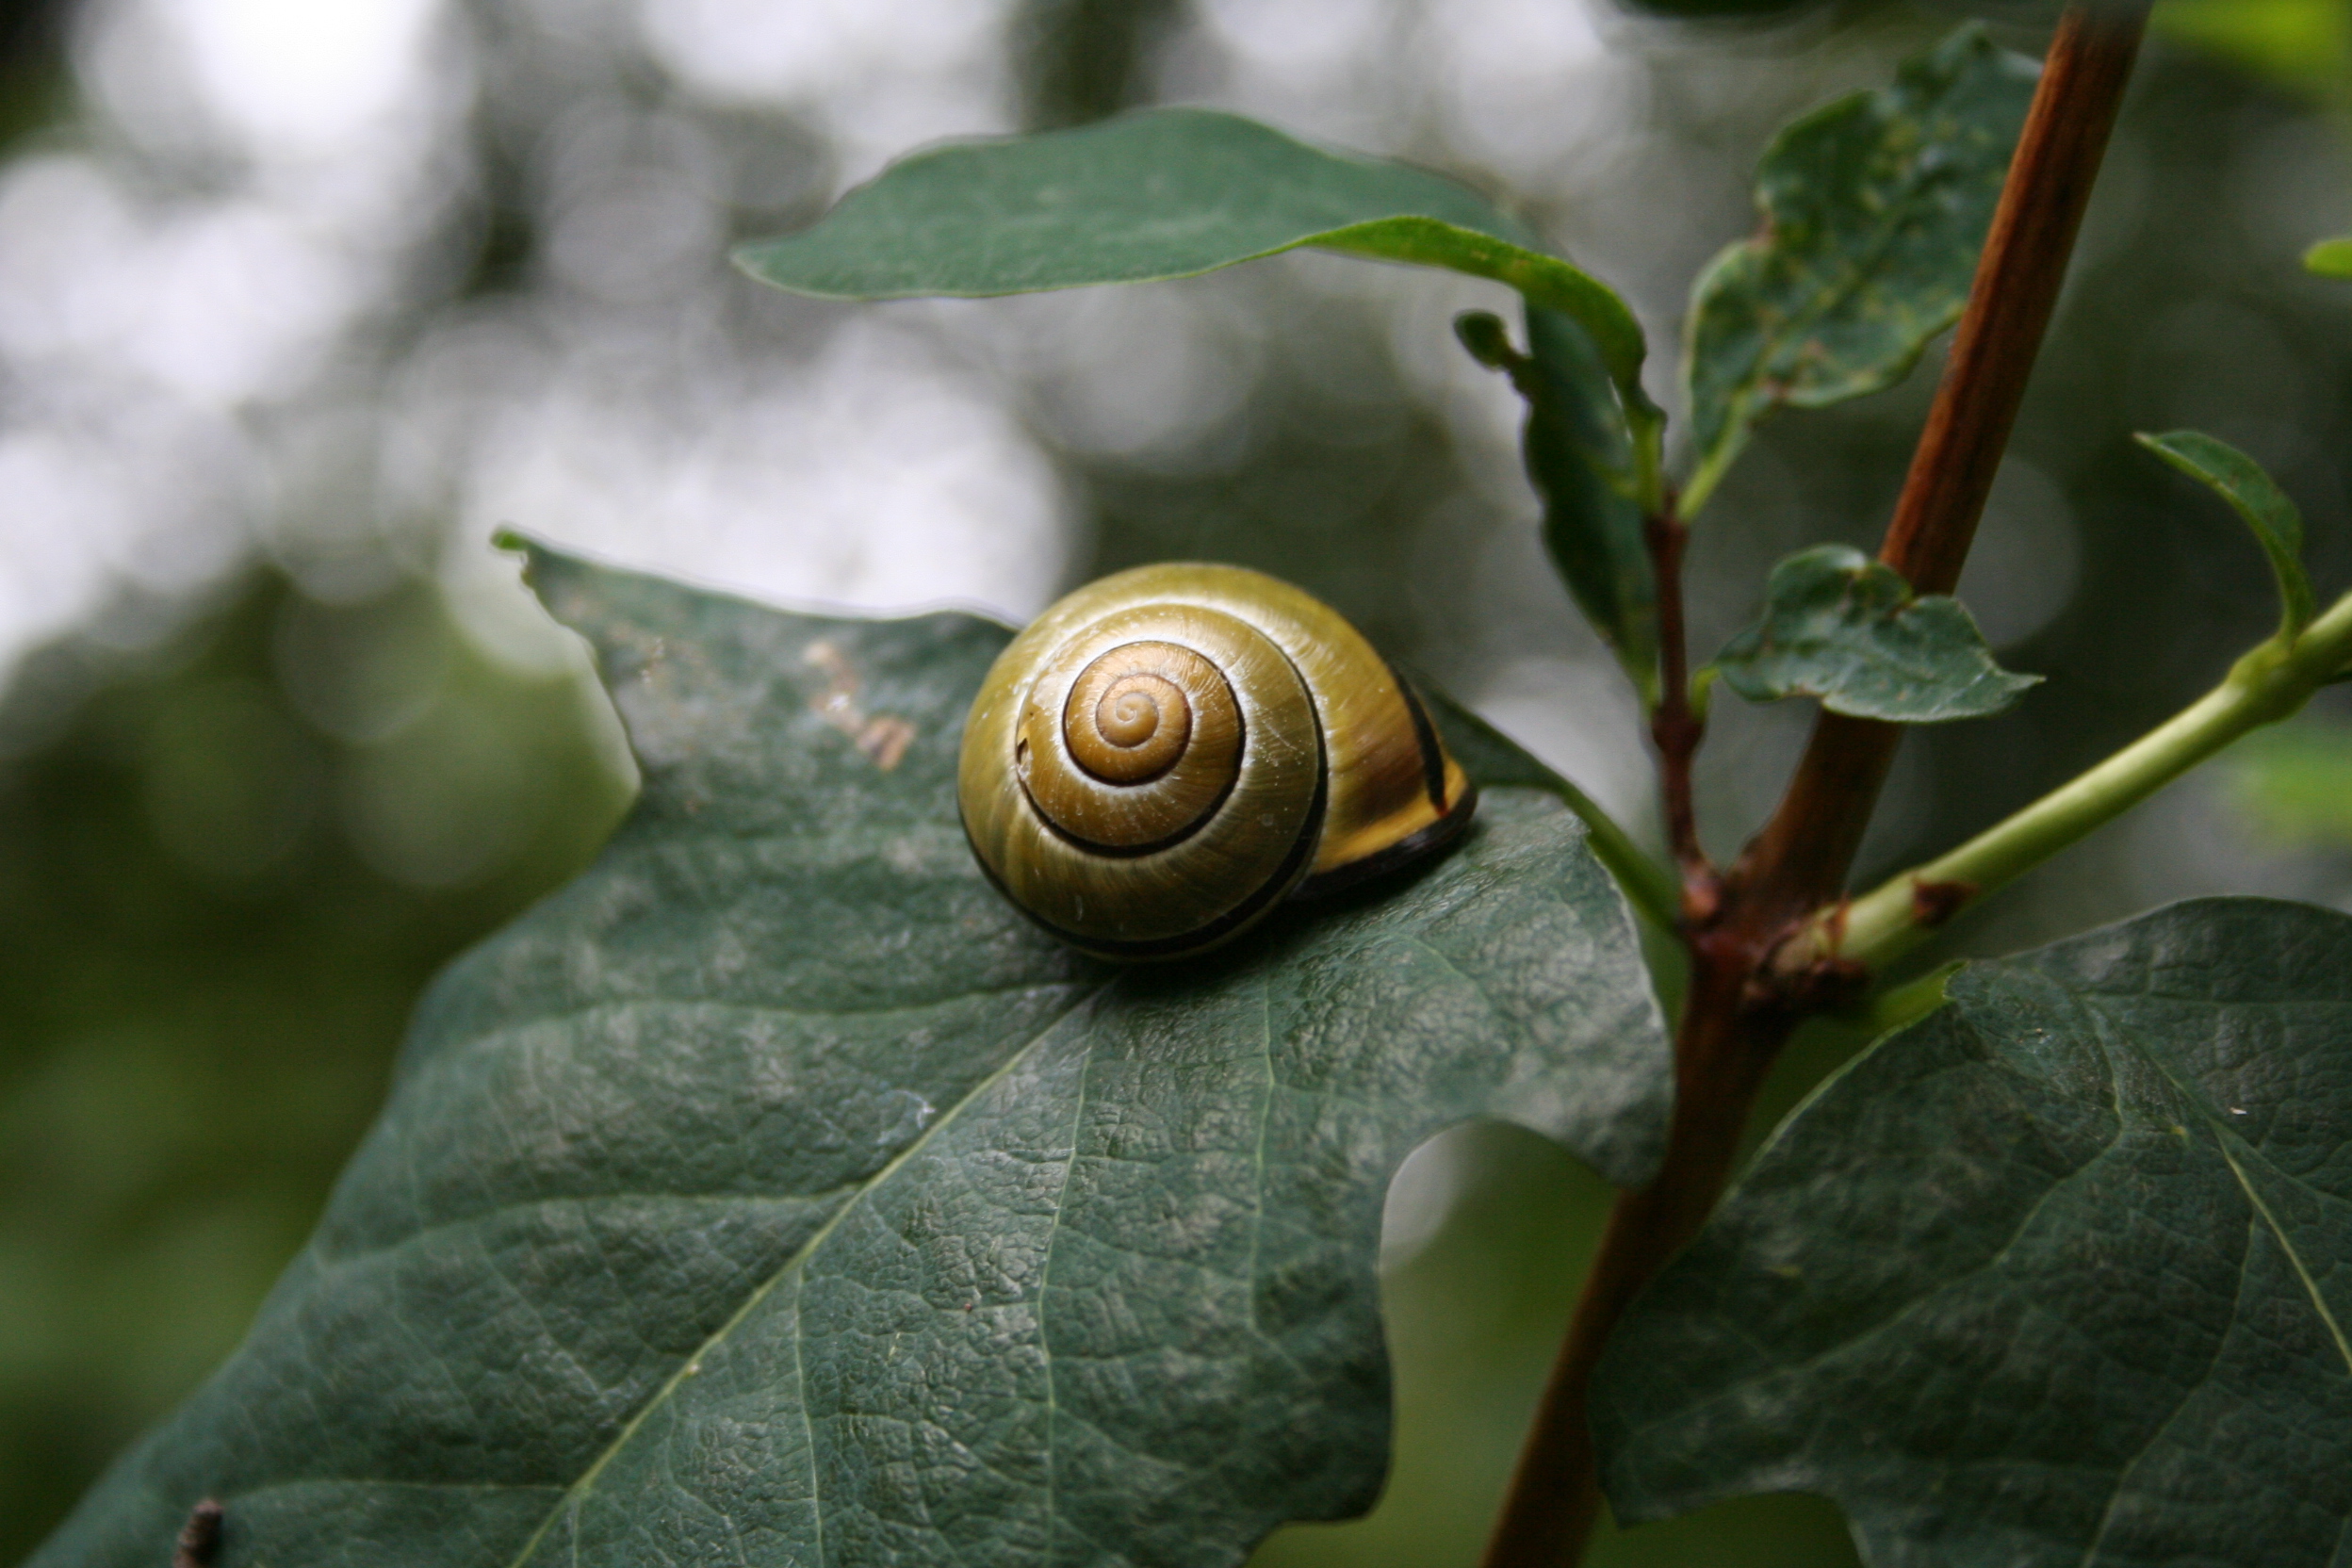 File:Snail on a leaf.jpg - Wikimedia Commons